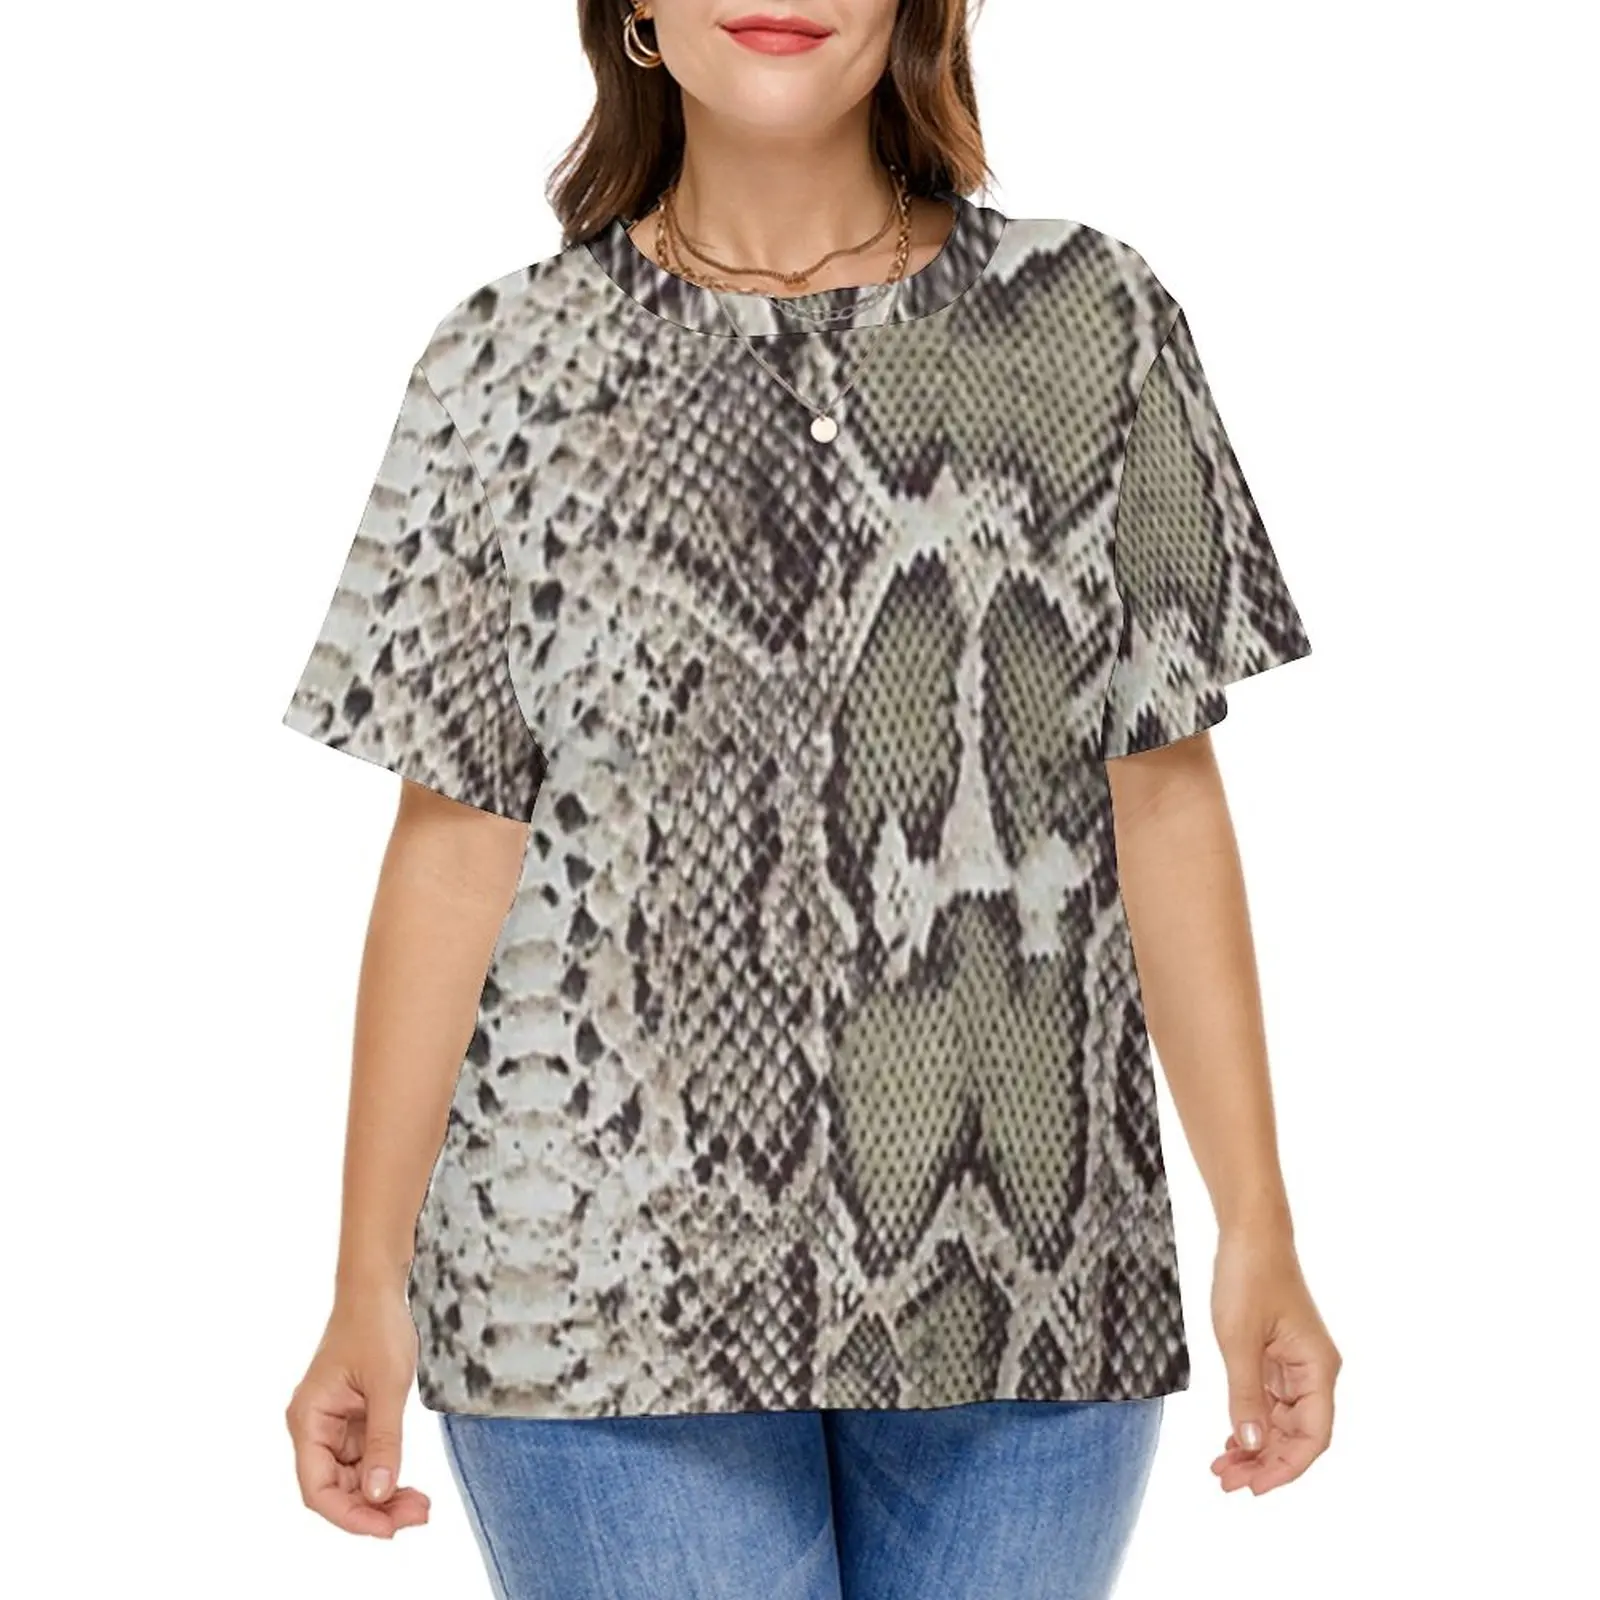 Snakeskin Print T Shirts Animal Skin Street Fashion T-Shirt Short Sleeve Cool Tee Shirt Plus Size Summer Printed Tops Gift Idea